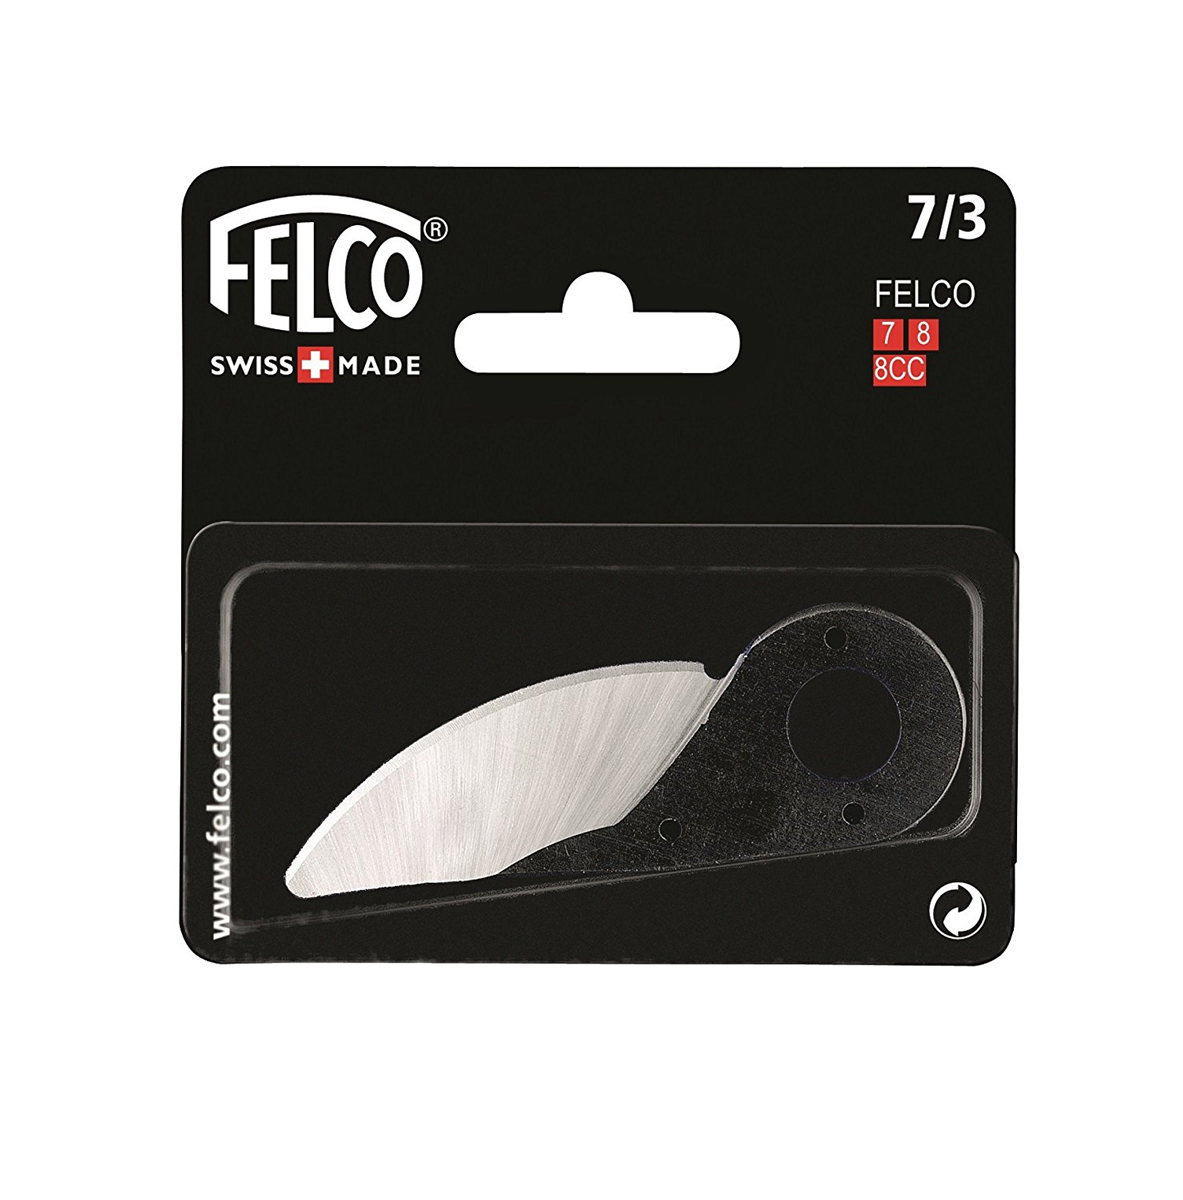 7-3 Cutting Blade for F 7 8 Felco - Garden Tools